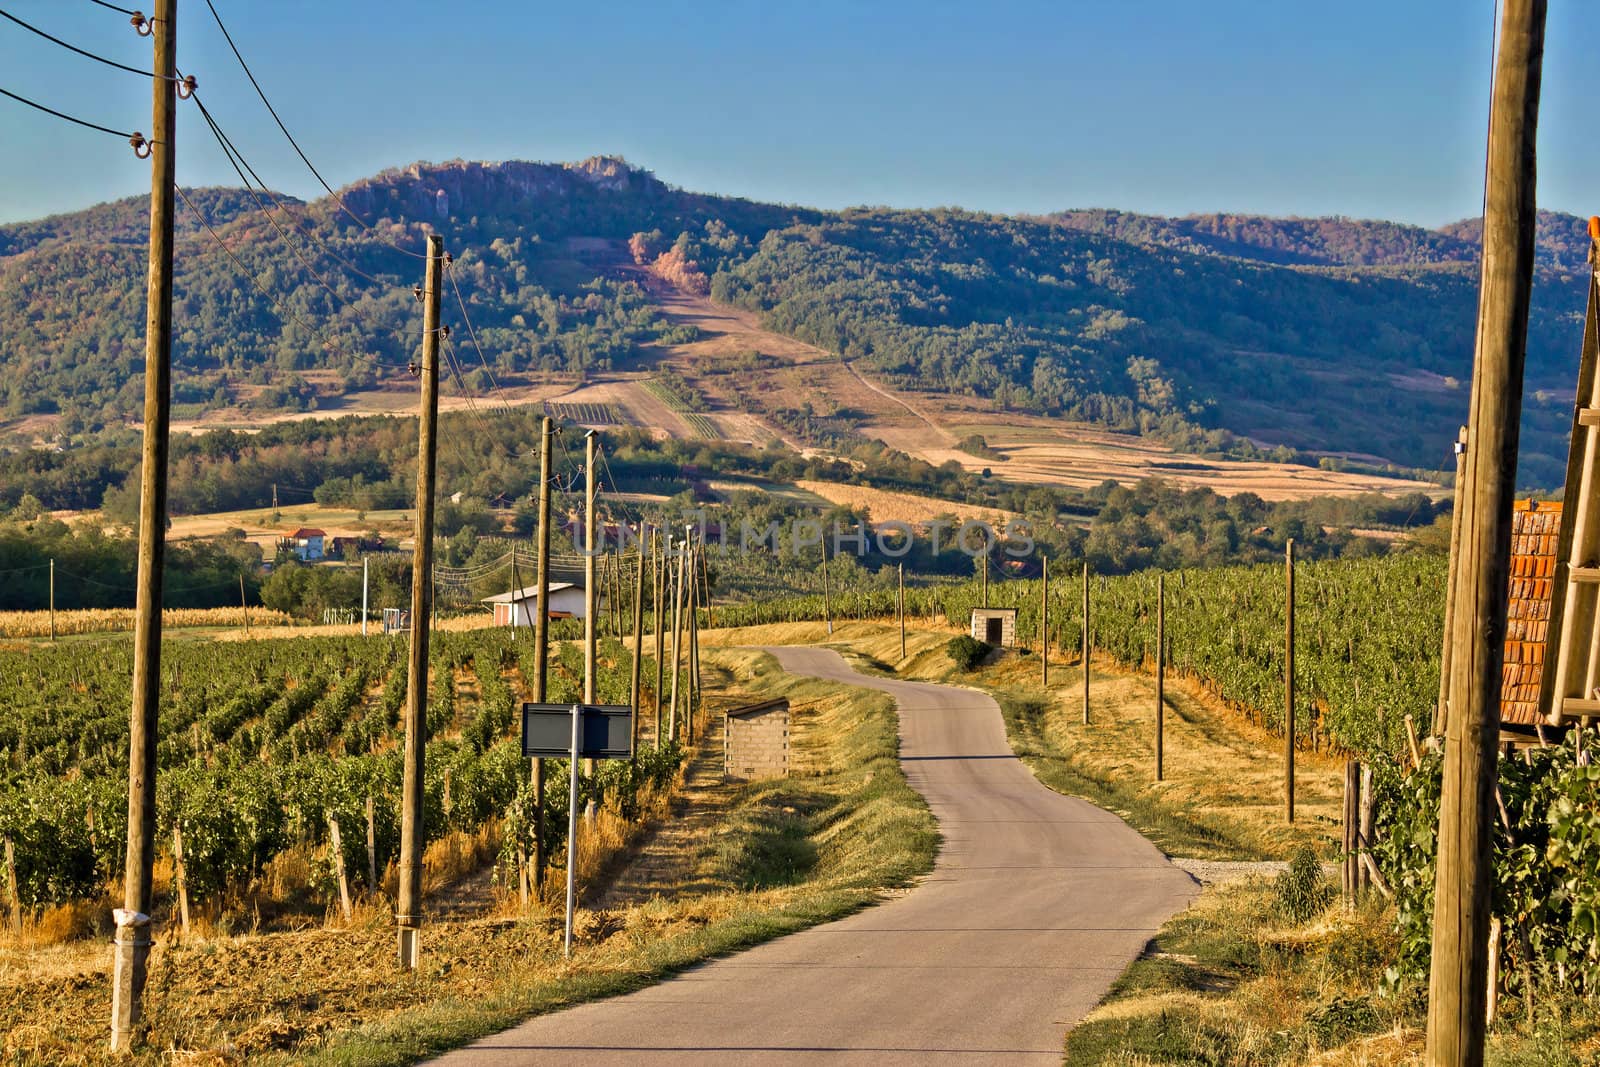 Mountain vineyard region scenic road by xbrchx